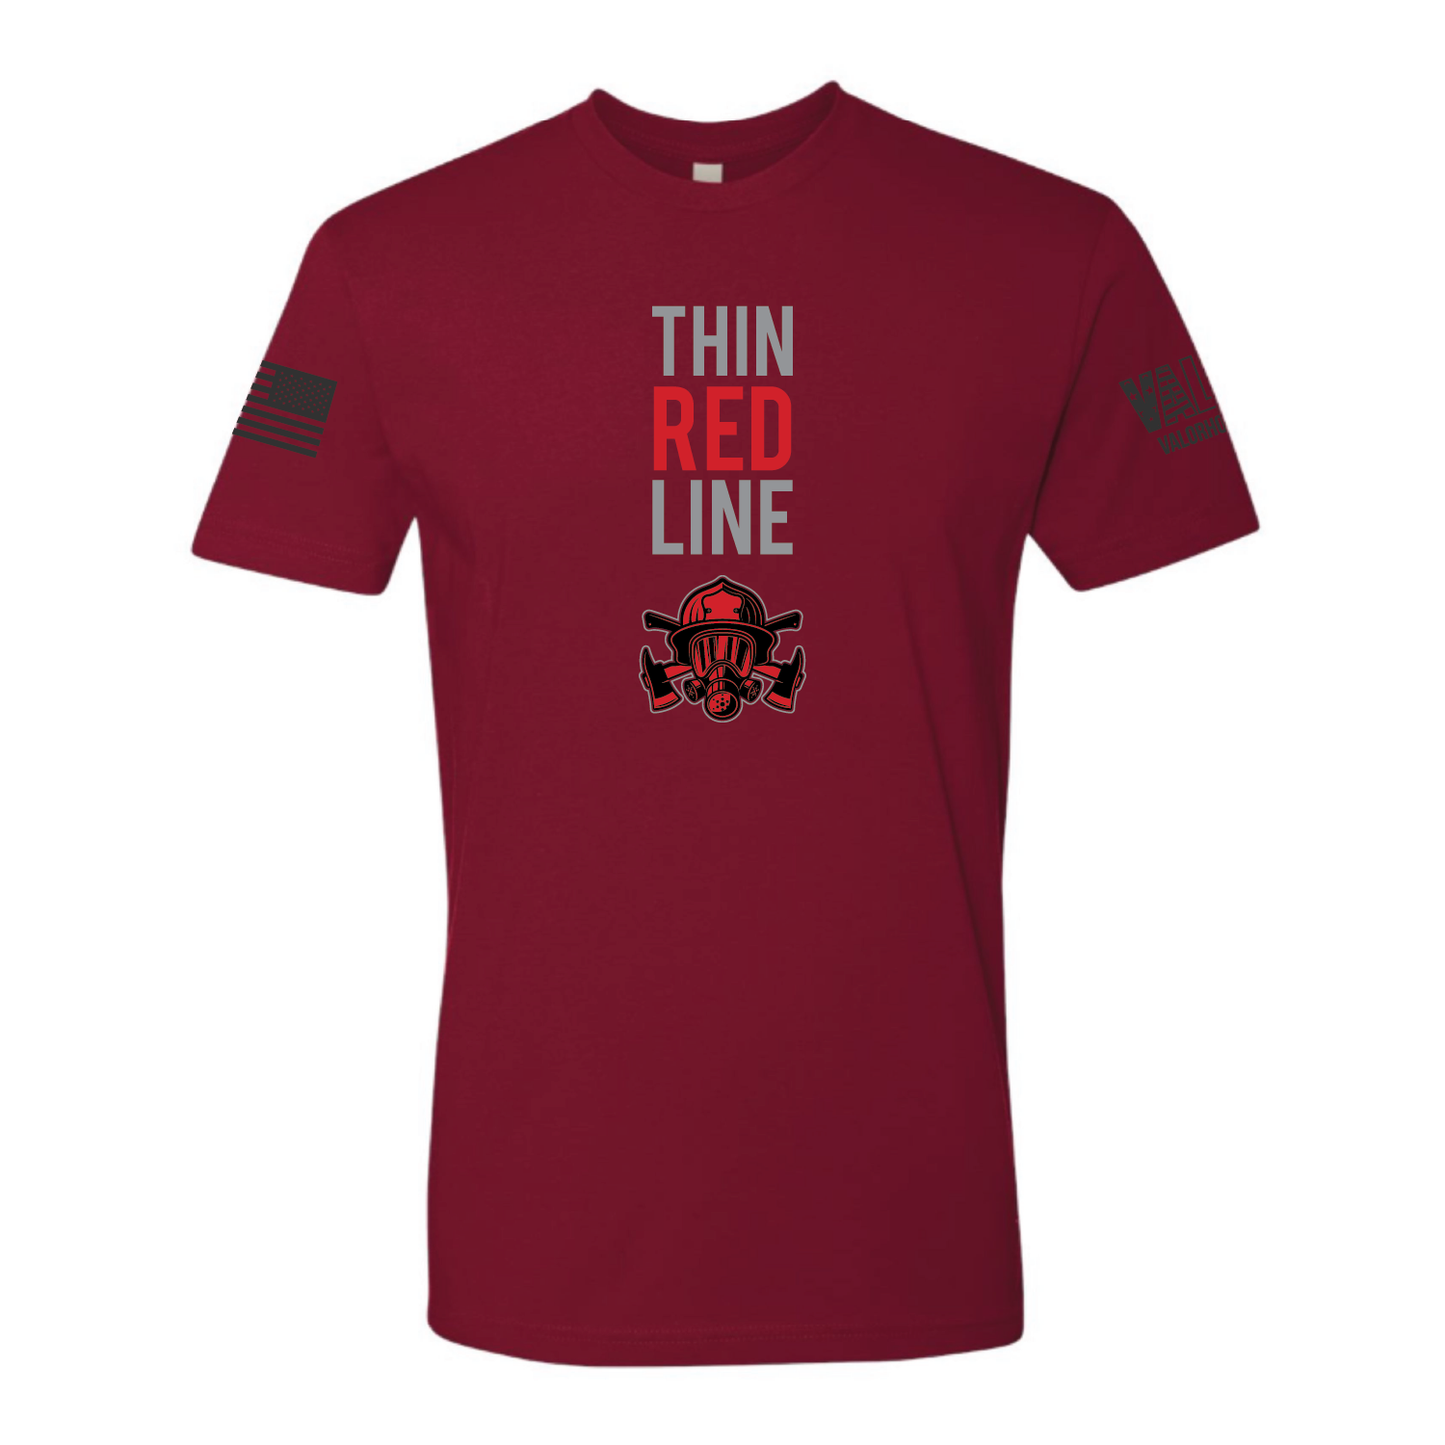 Gentlemen's "Thin Red Line" Shirt